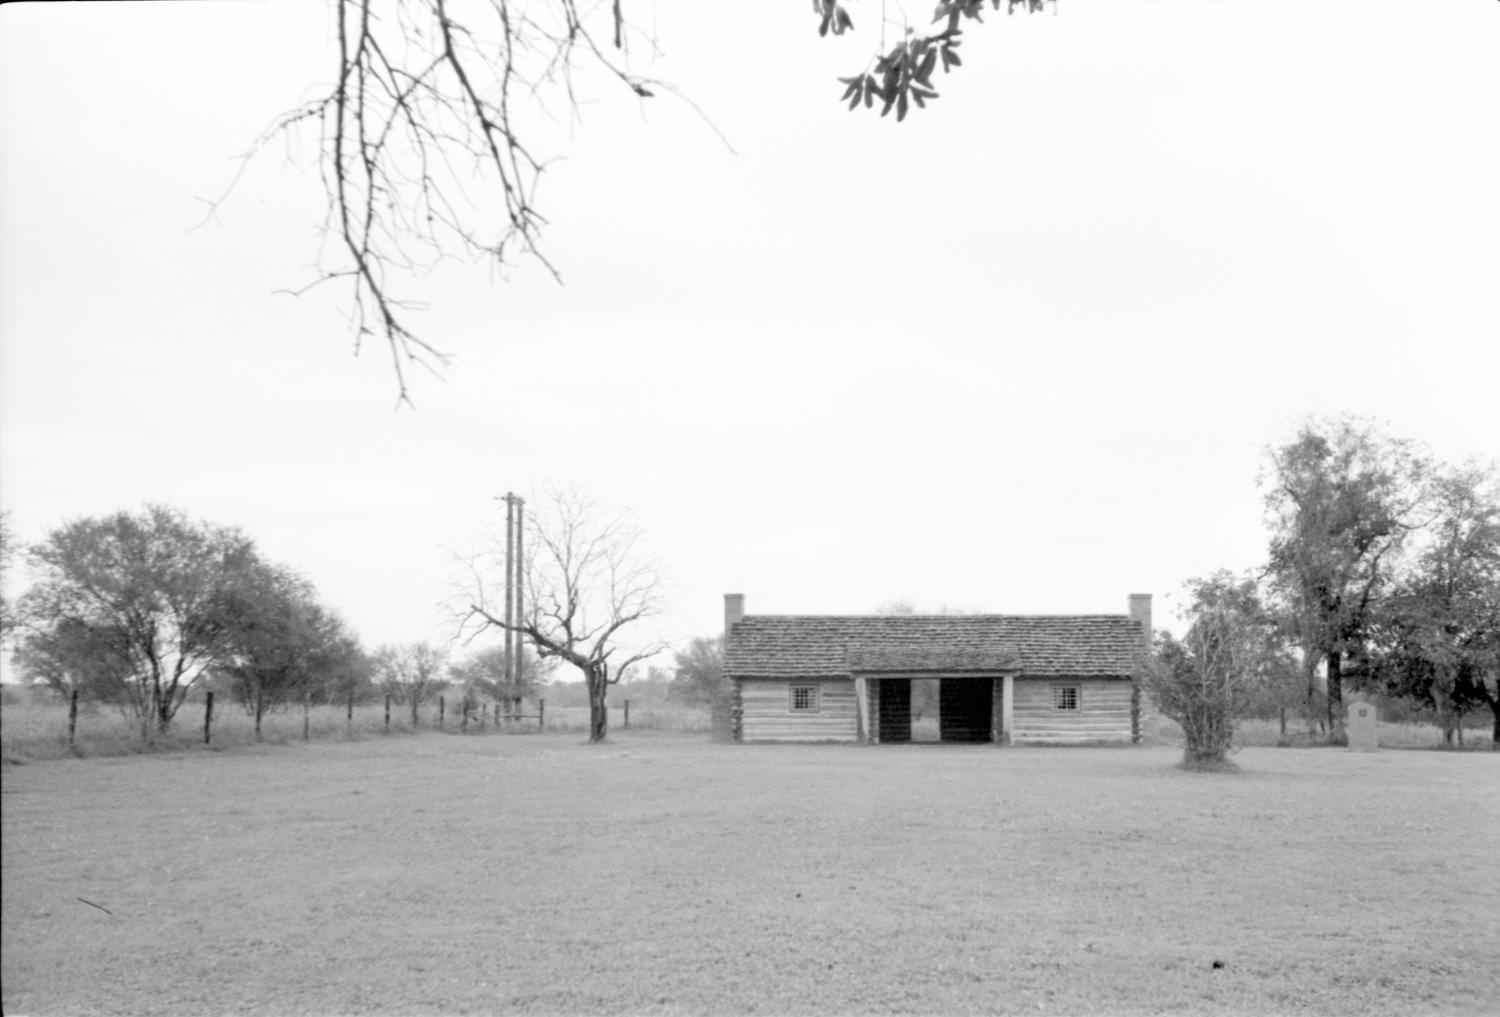 Stephen F. Austin State Park (Restored Home of Stephen F. Austin, 1958